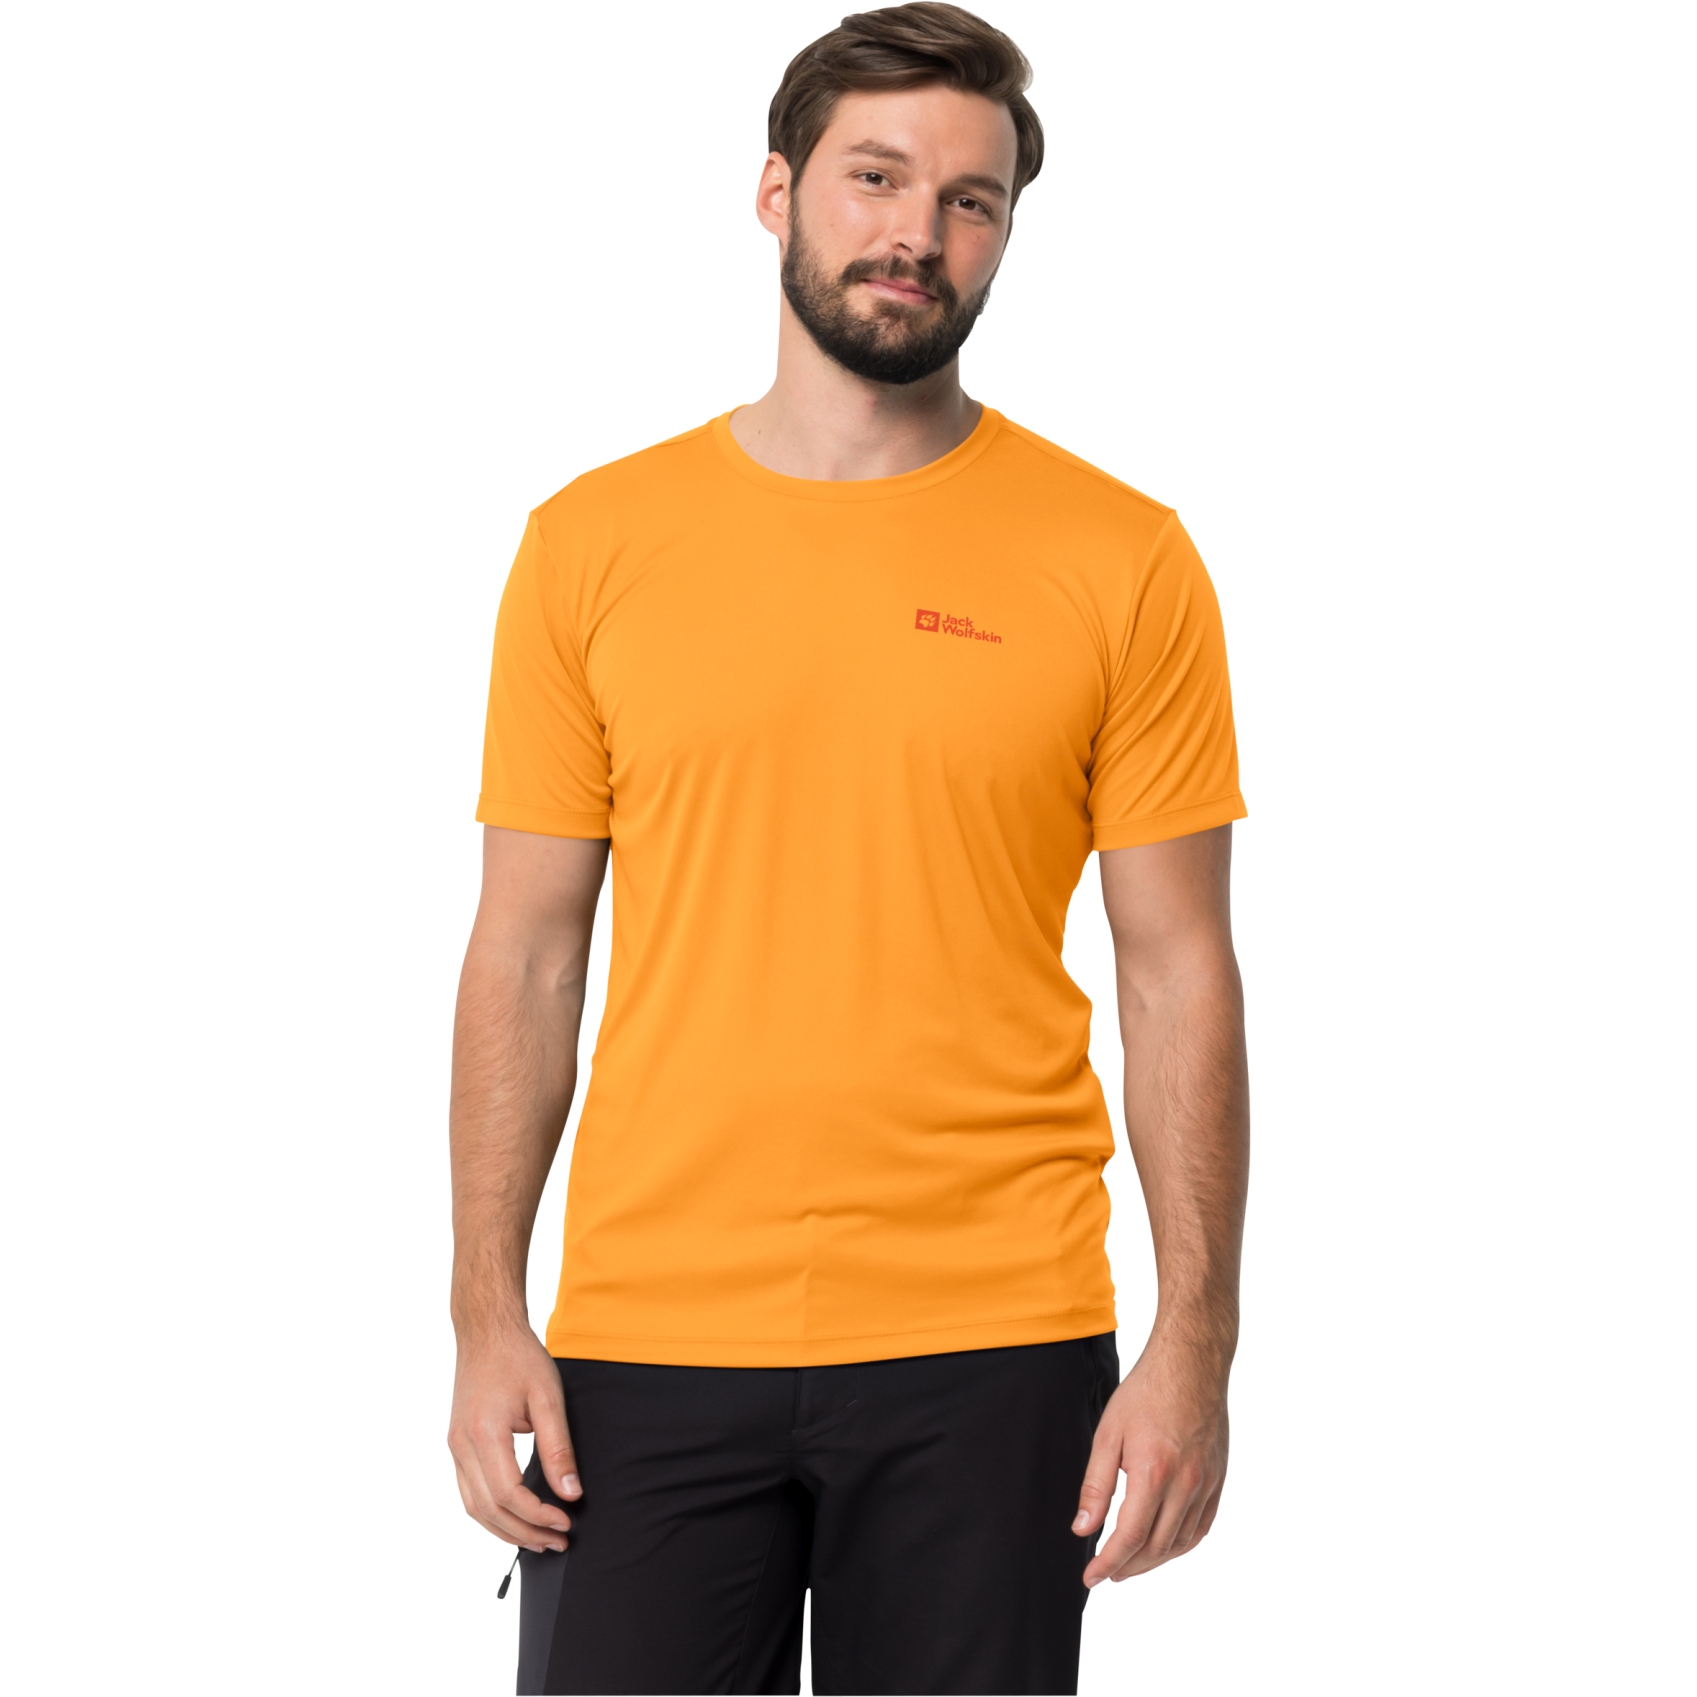 Picture of Jack Wolfskin Tech T-Shirt Men - orange pop